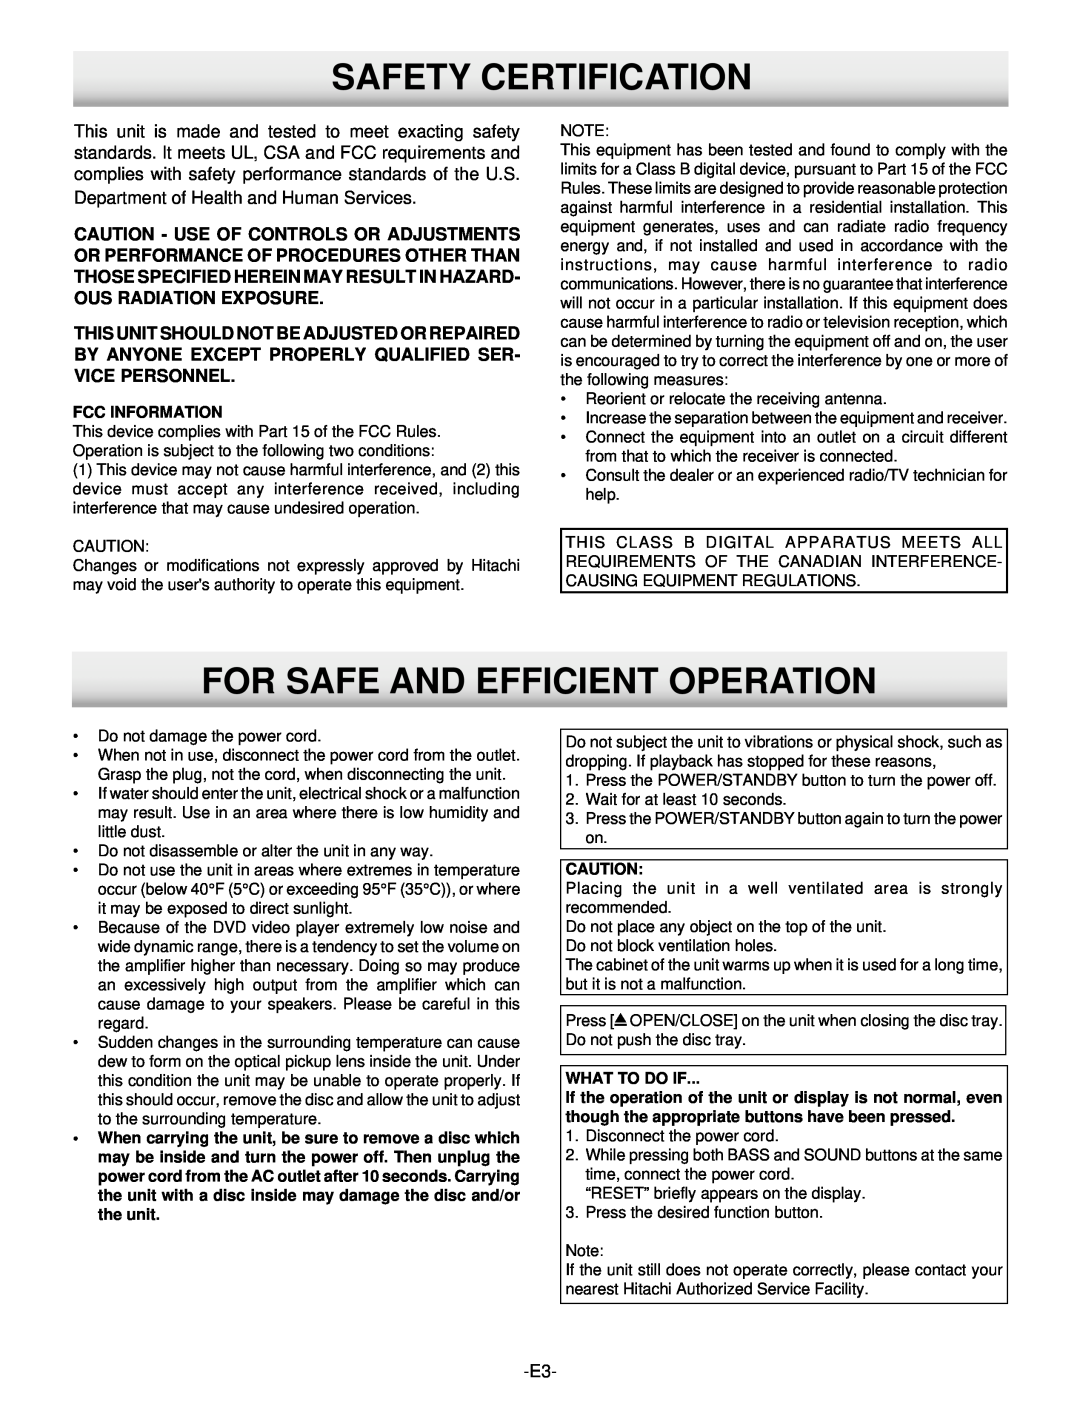 Hitachi DV-S522U instruction manual Safety Certification, For Safe And Efficient Operation 